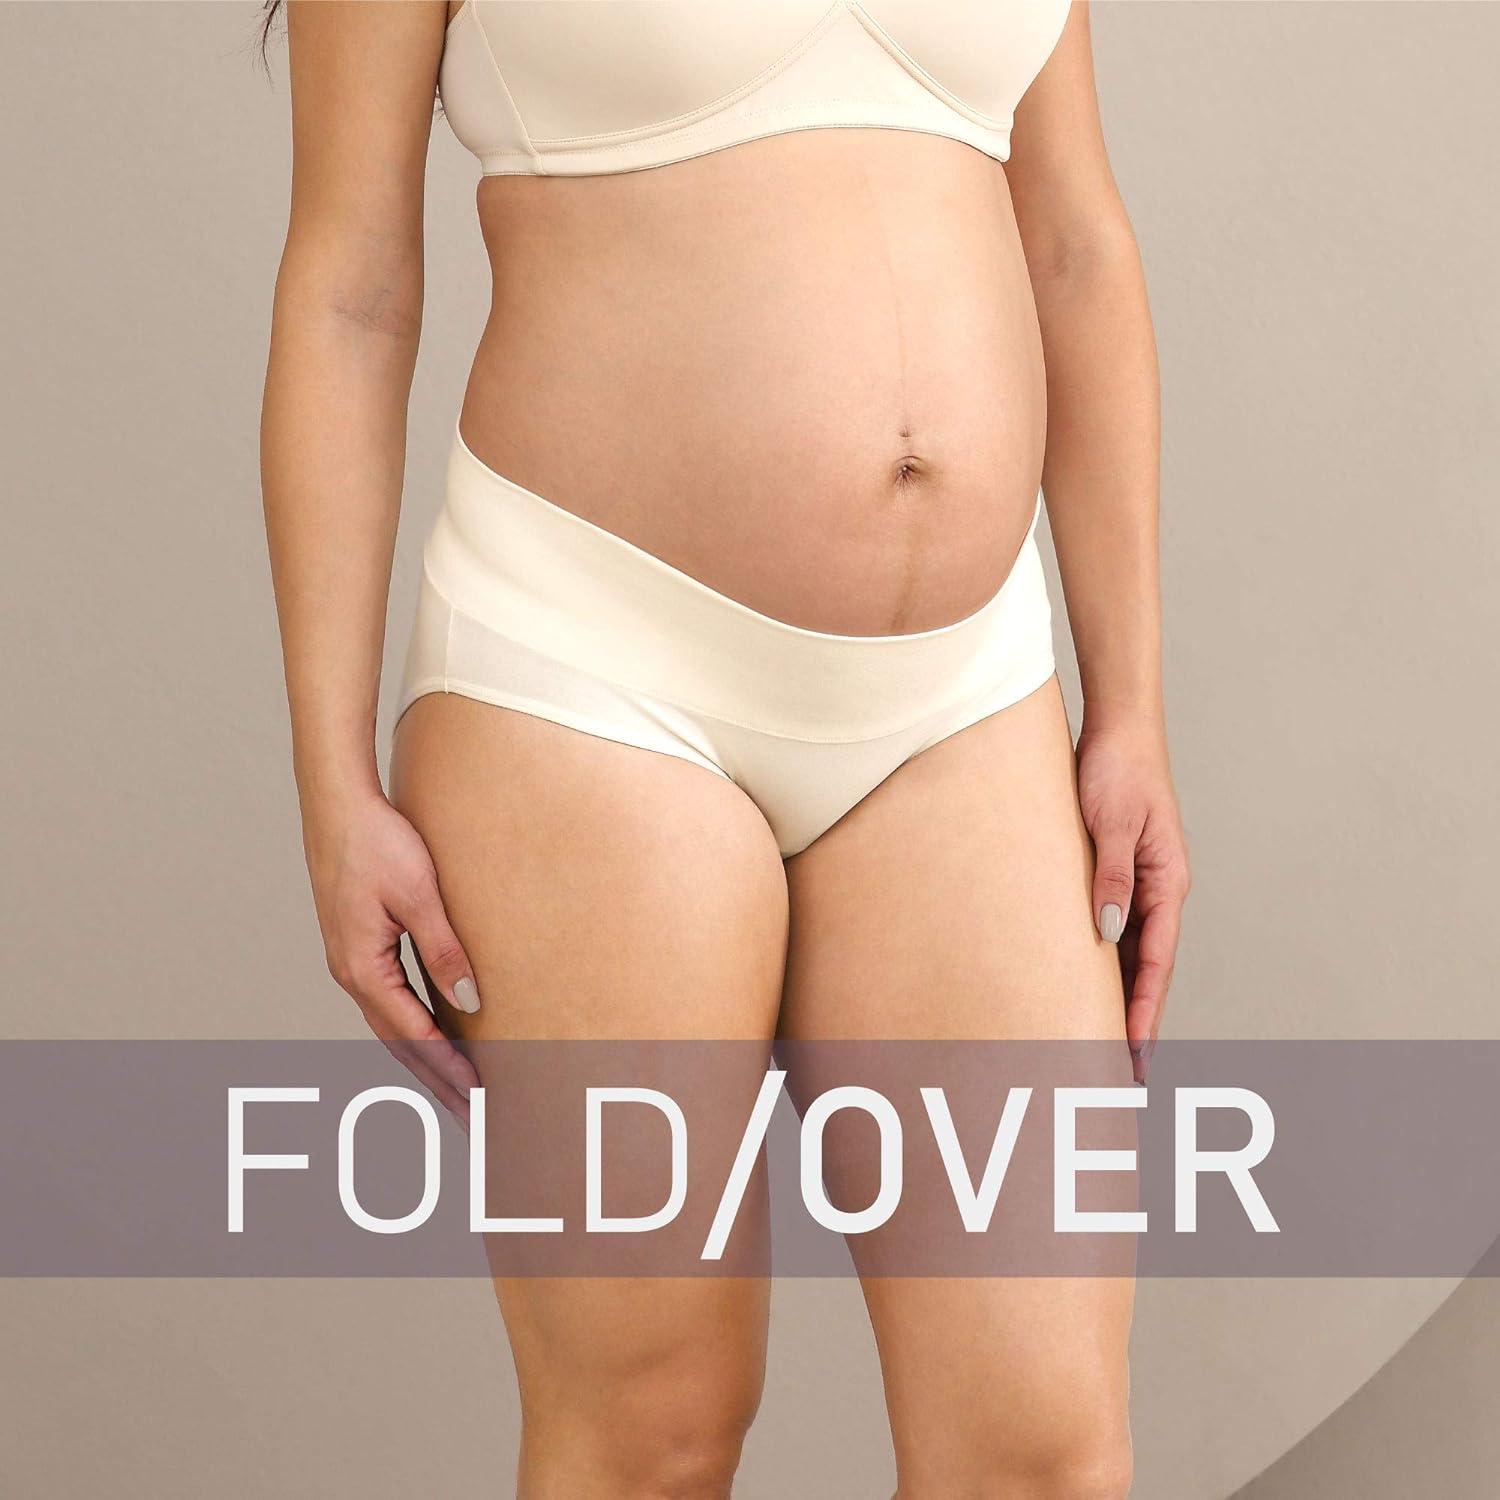 Intimate Portal Maternity Underwear